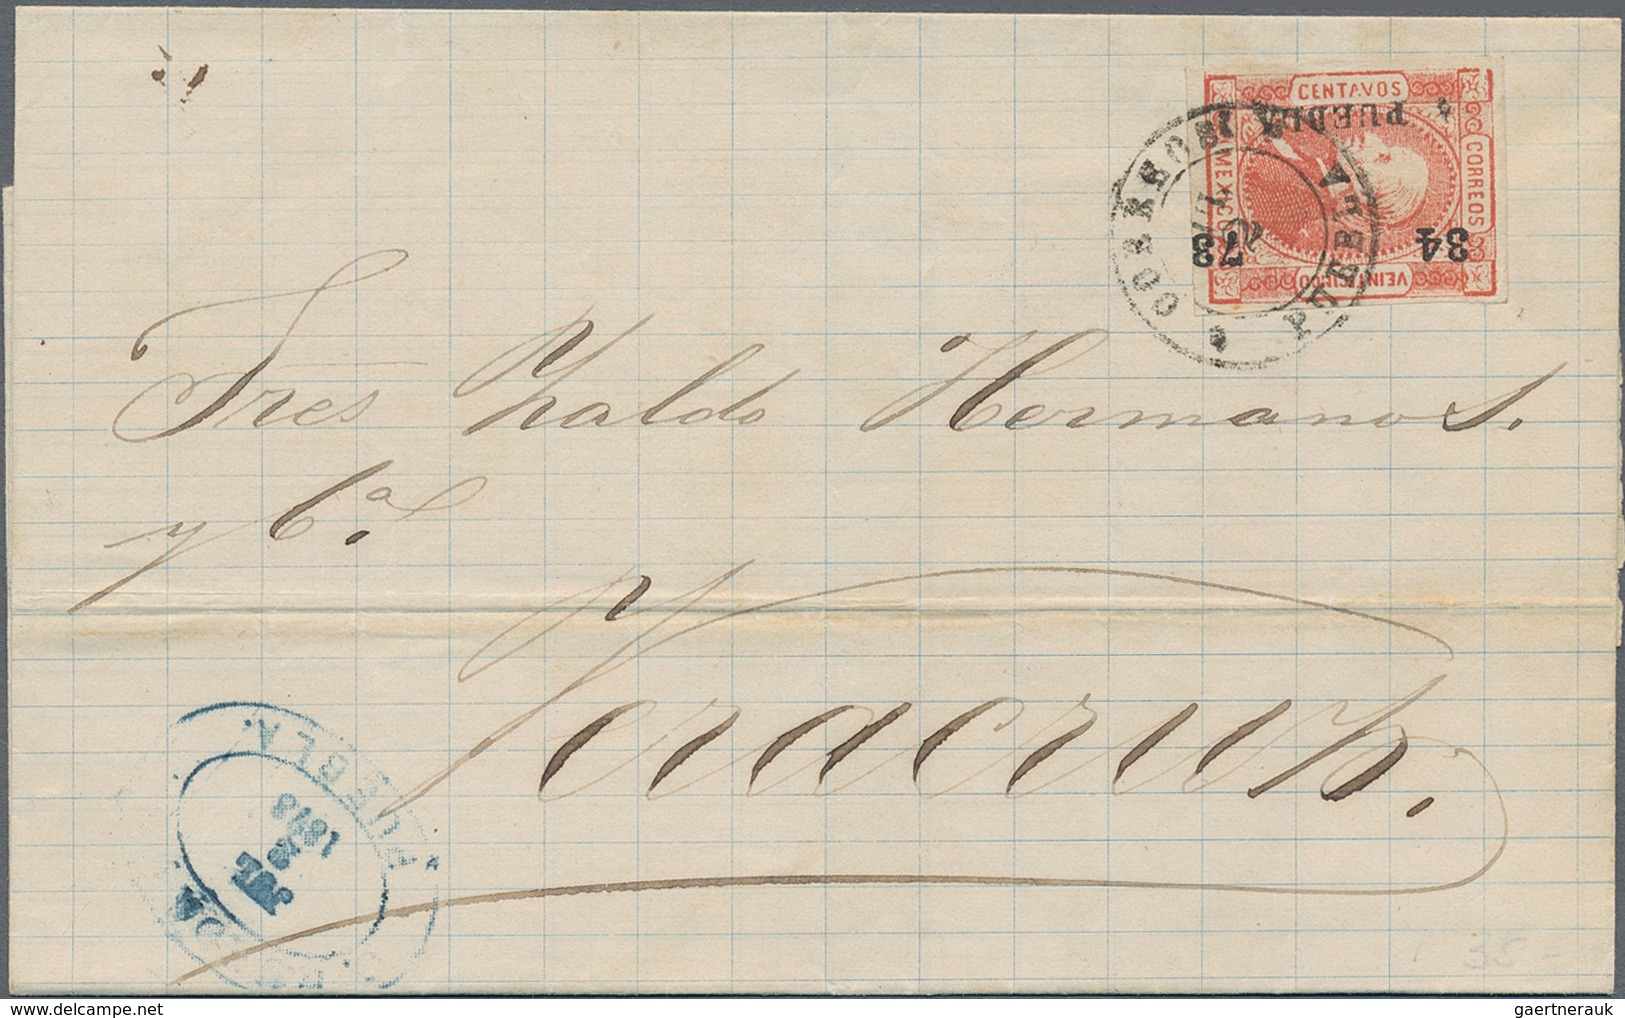 Mexiko: 1868/82 (ca.), inland covers (12) with various issues inc. fancy markings viz. "FRANCO EN C.